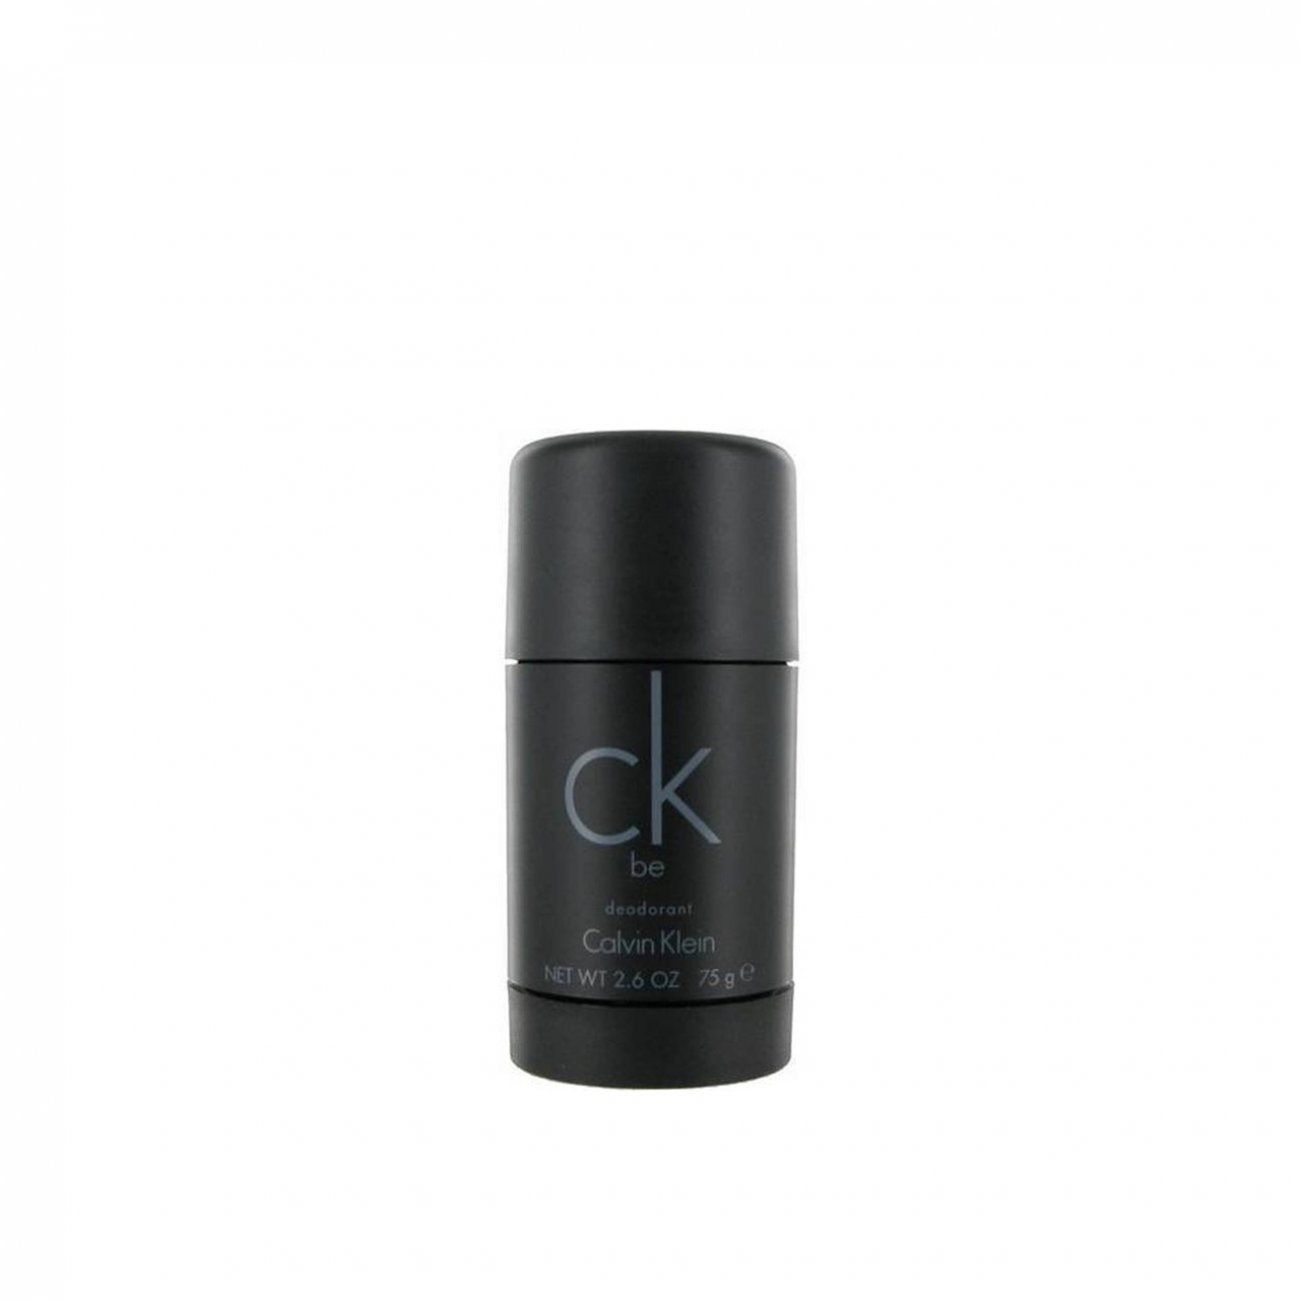 Buy Calvin Klein CK Be Deodorant Stick 75g · Russia